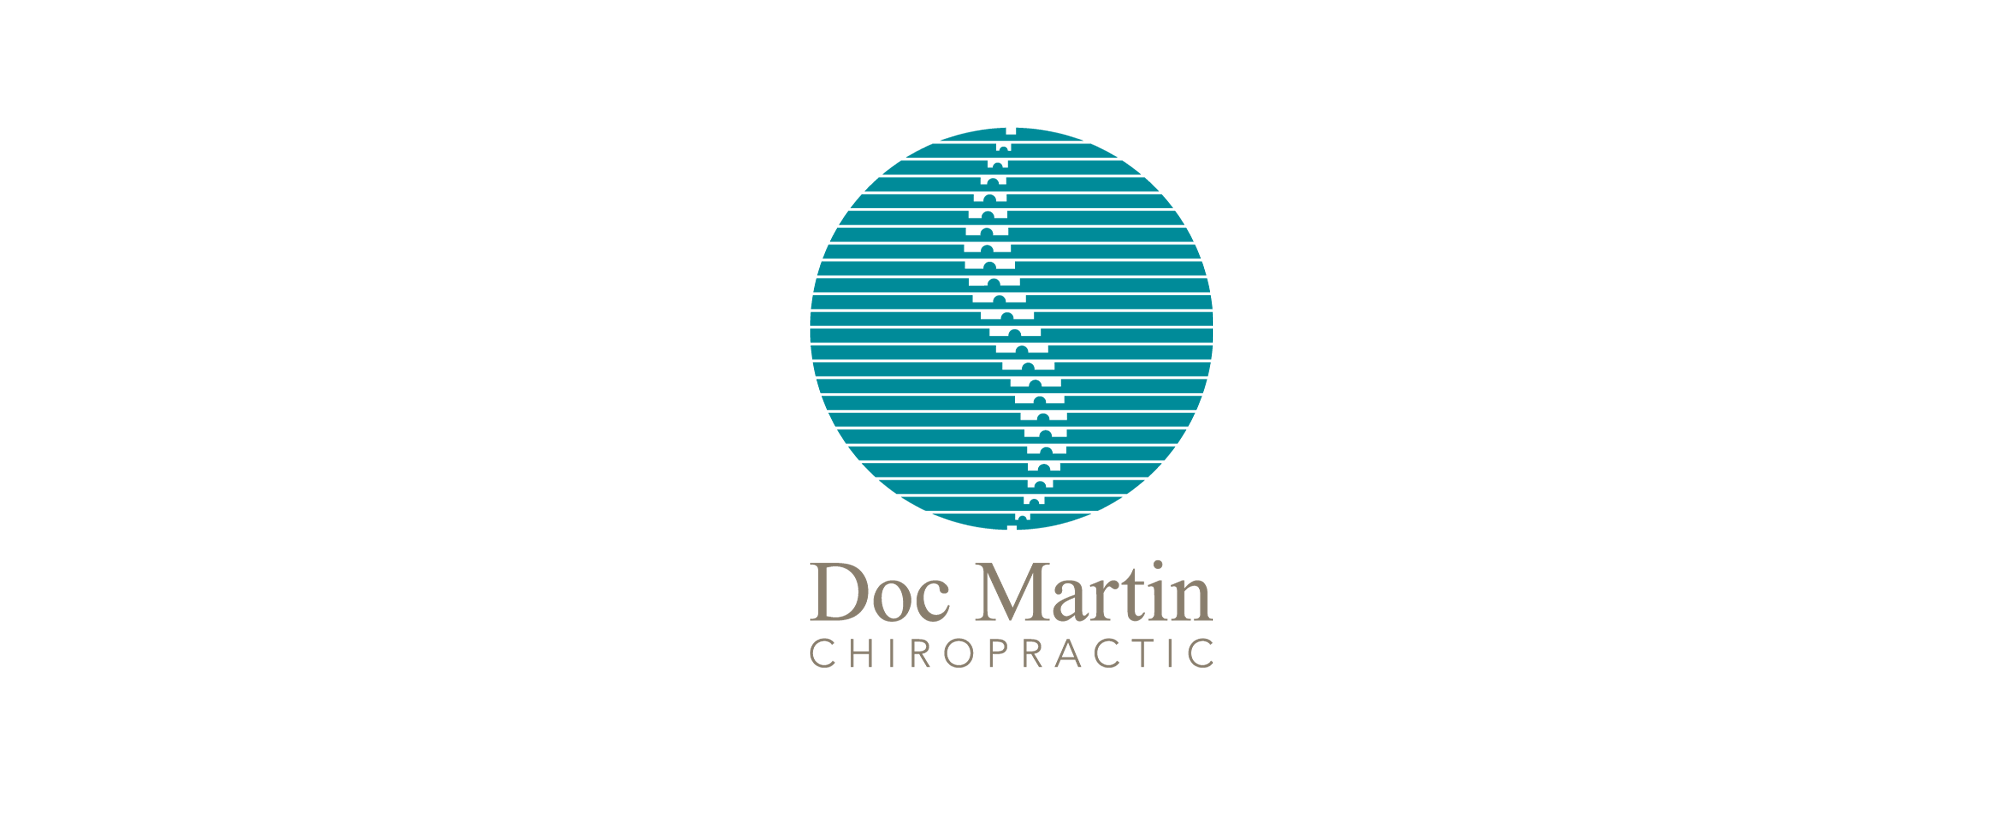 Doc Martin Chiropractic Identity Inhouse